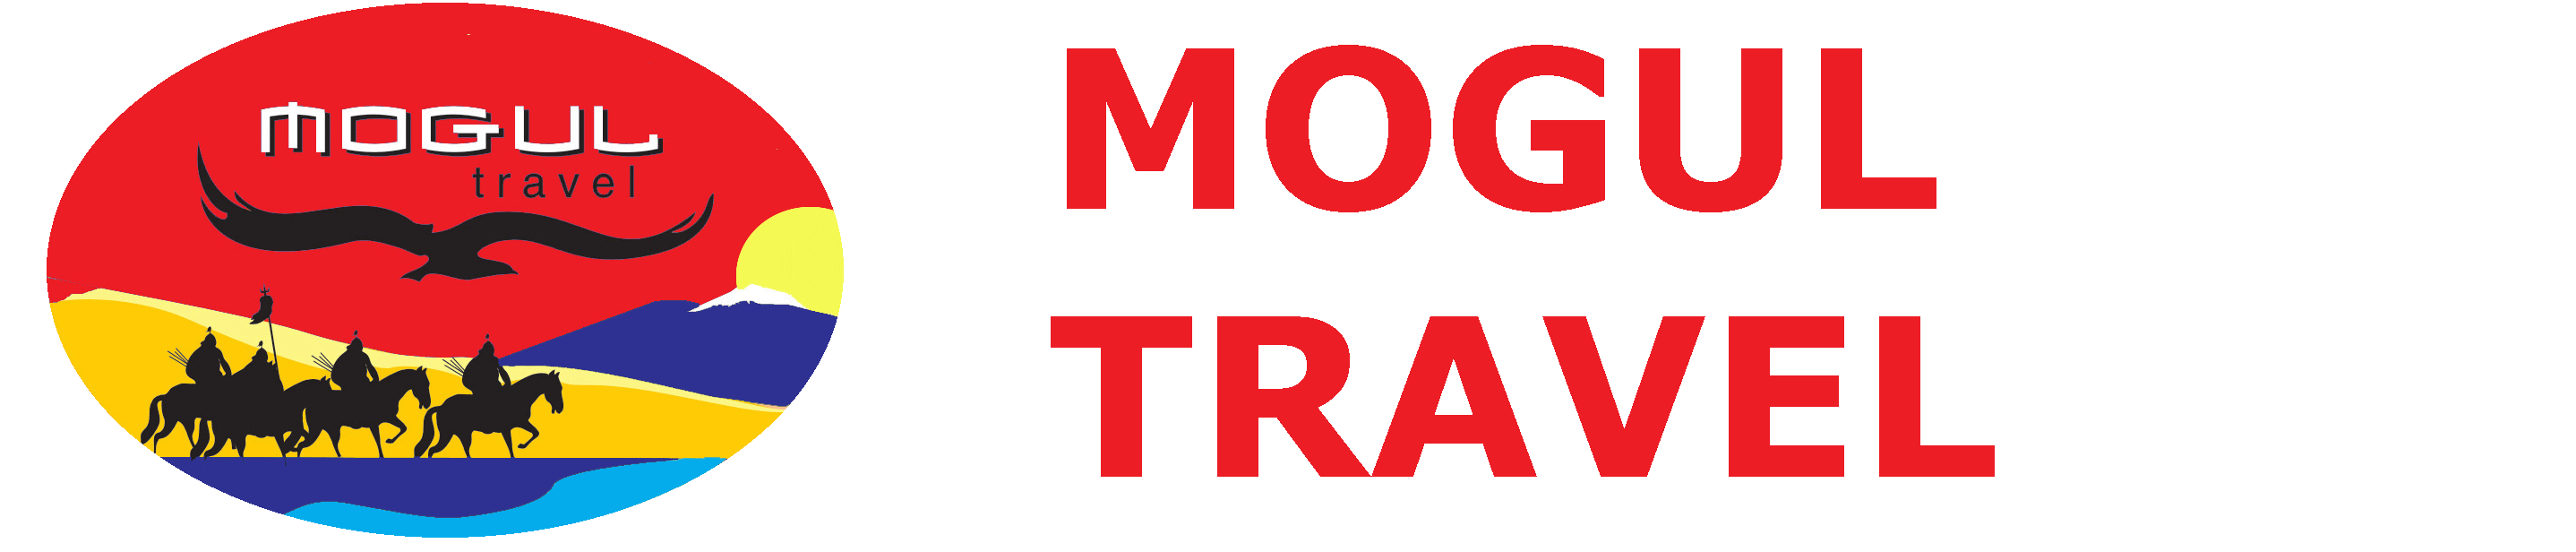 Mongolia Logo - An epic horseback riding trek - Mongolia travel, tours and expeditions